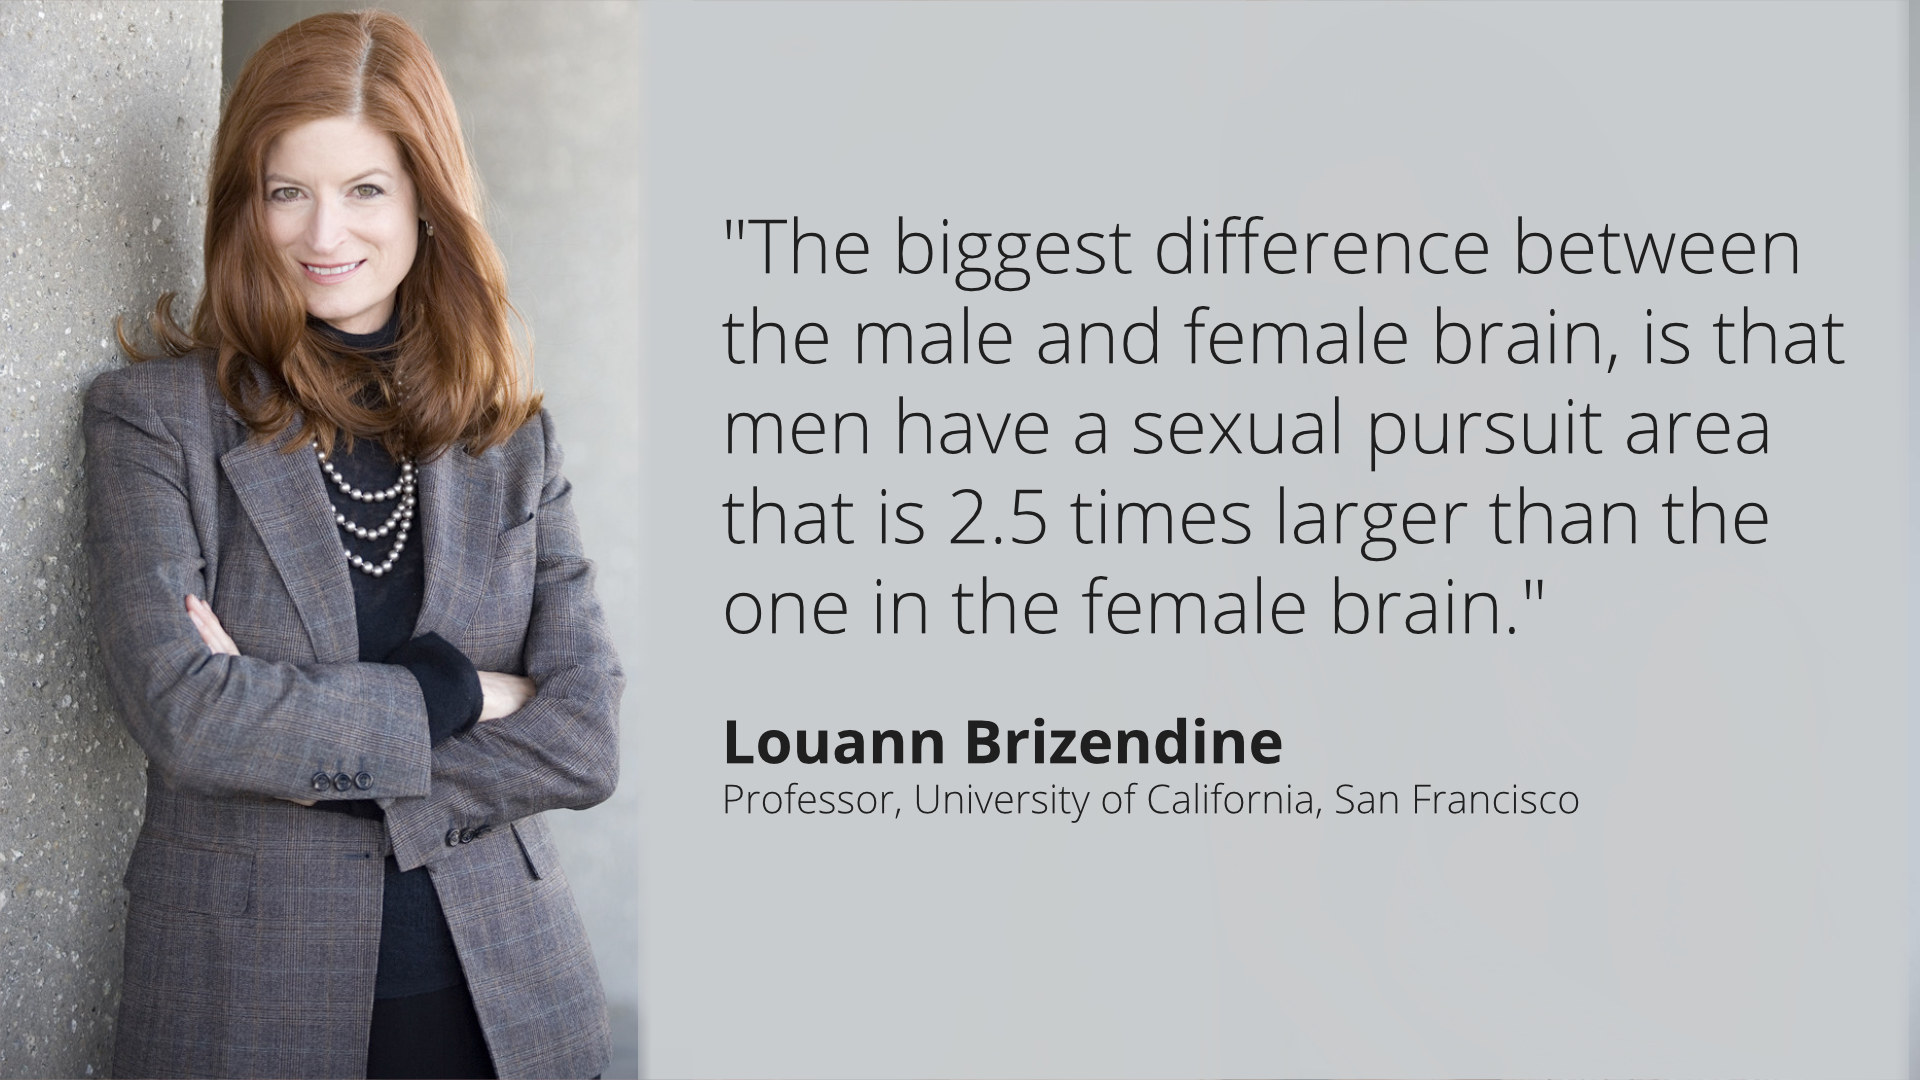 Louann Brizendine - Professor, University of California, San Francisco